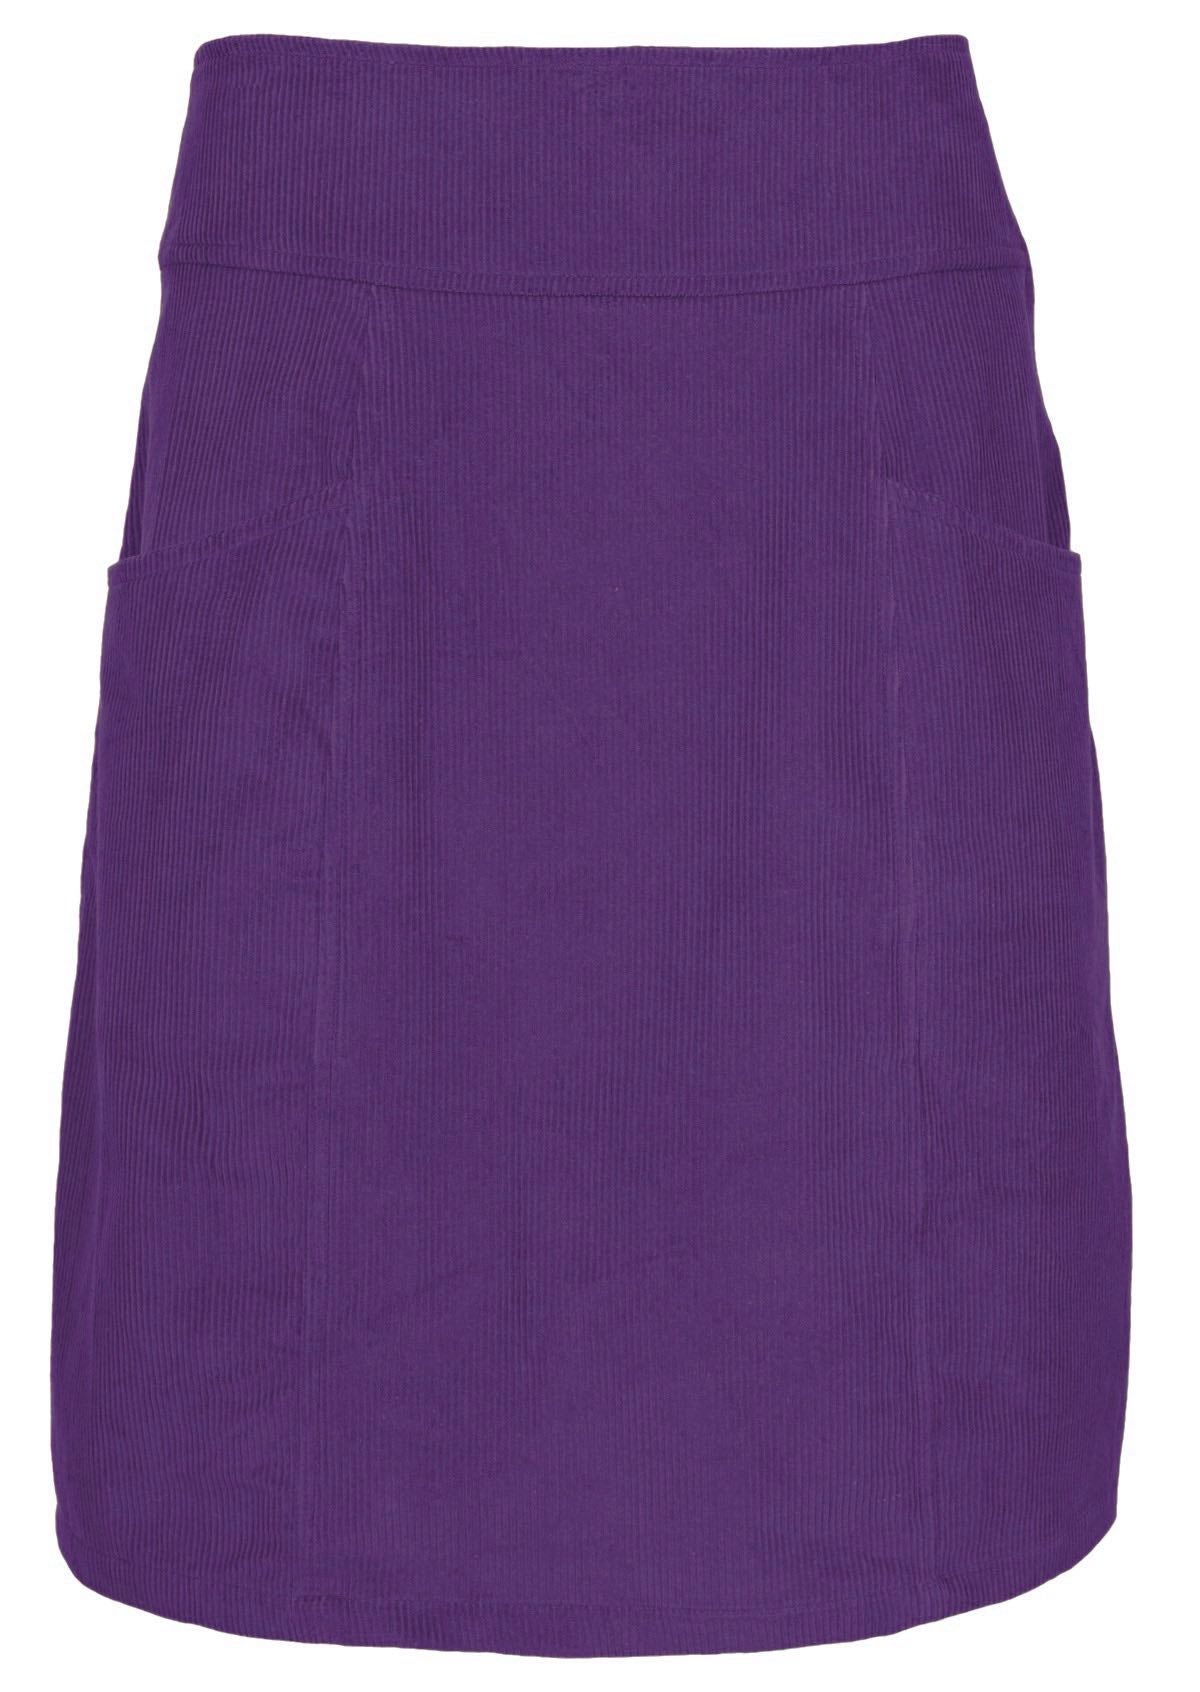 Mid length 100% cotton corduroy skirt in a rich purple colour. 